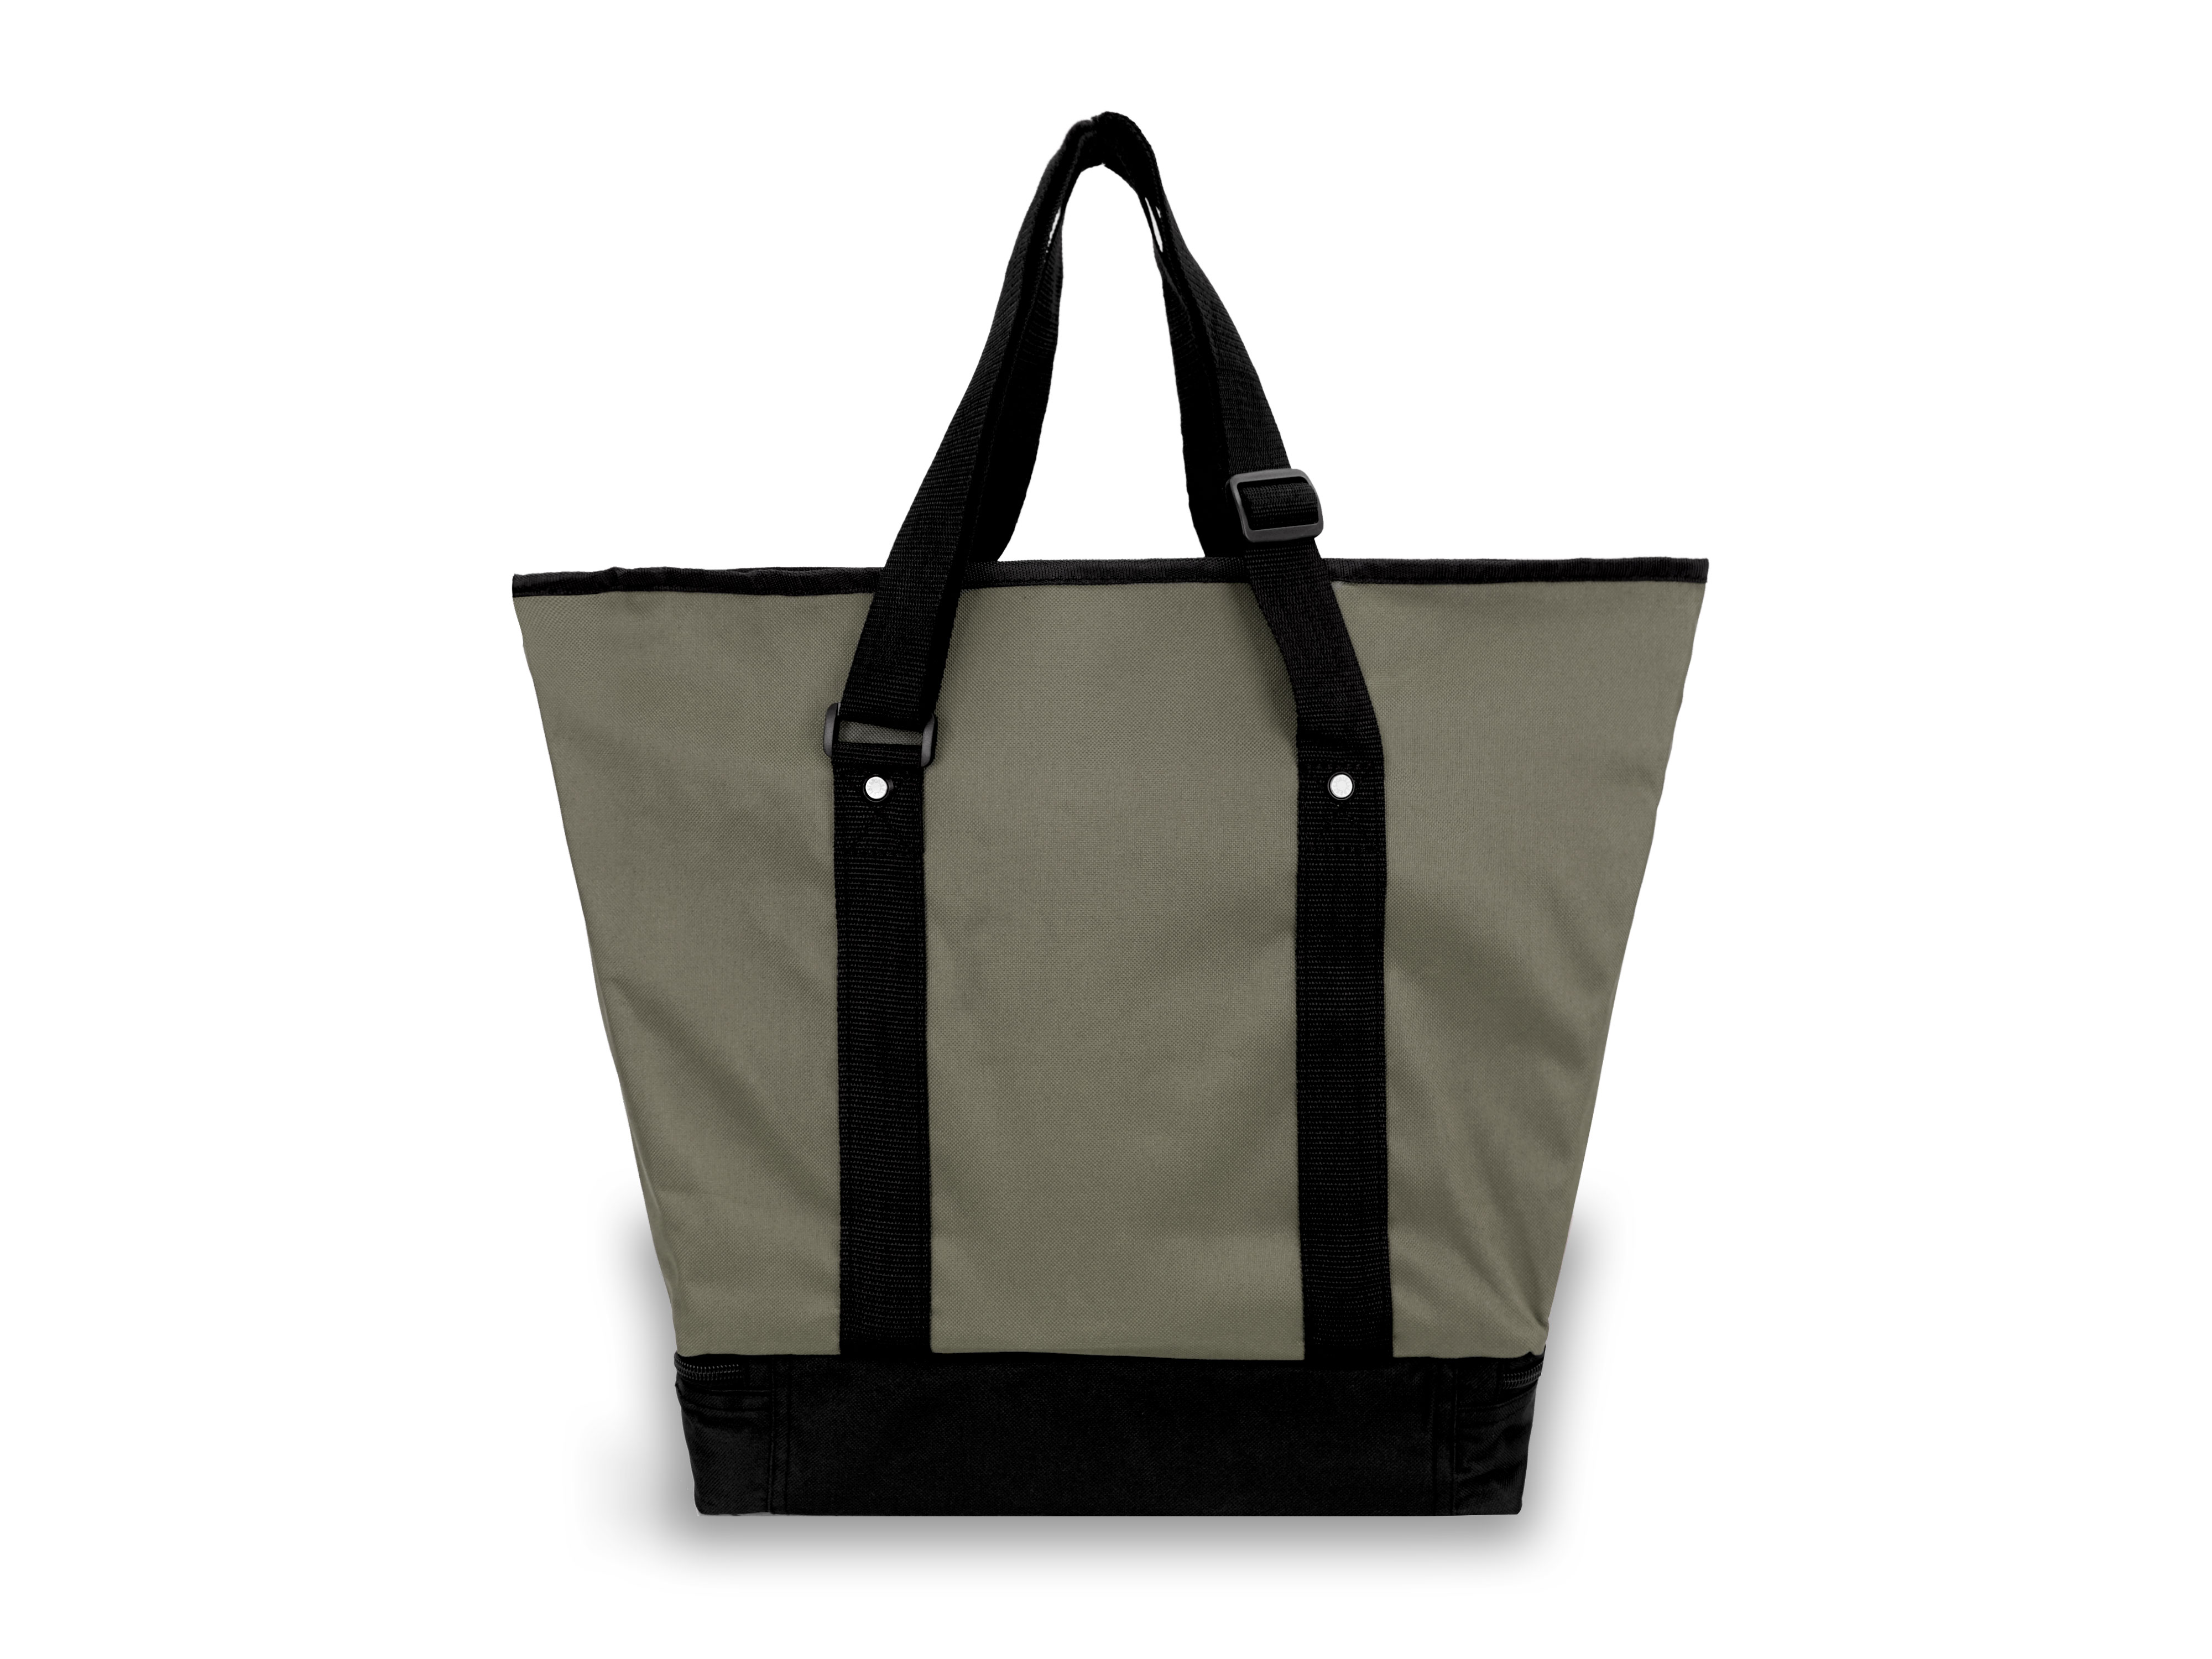 Everest Unisex Deluxe Shopping Tote Bag Khaki - image 3 of 4